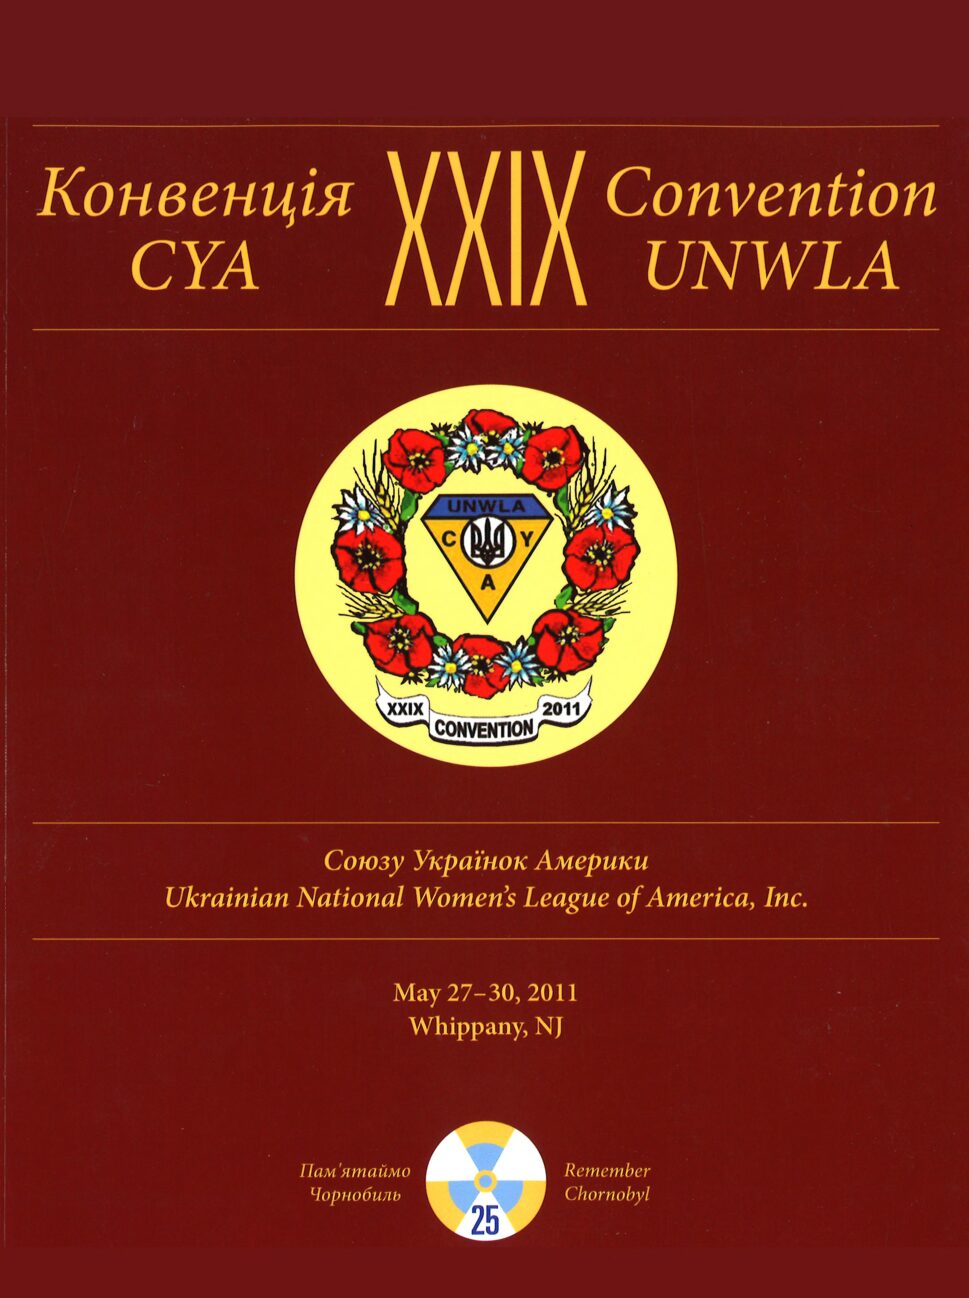 2011 – XXIX convention – UNWLA